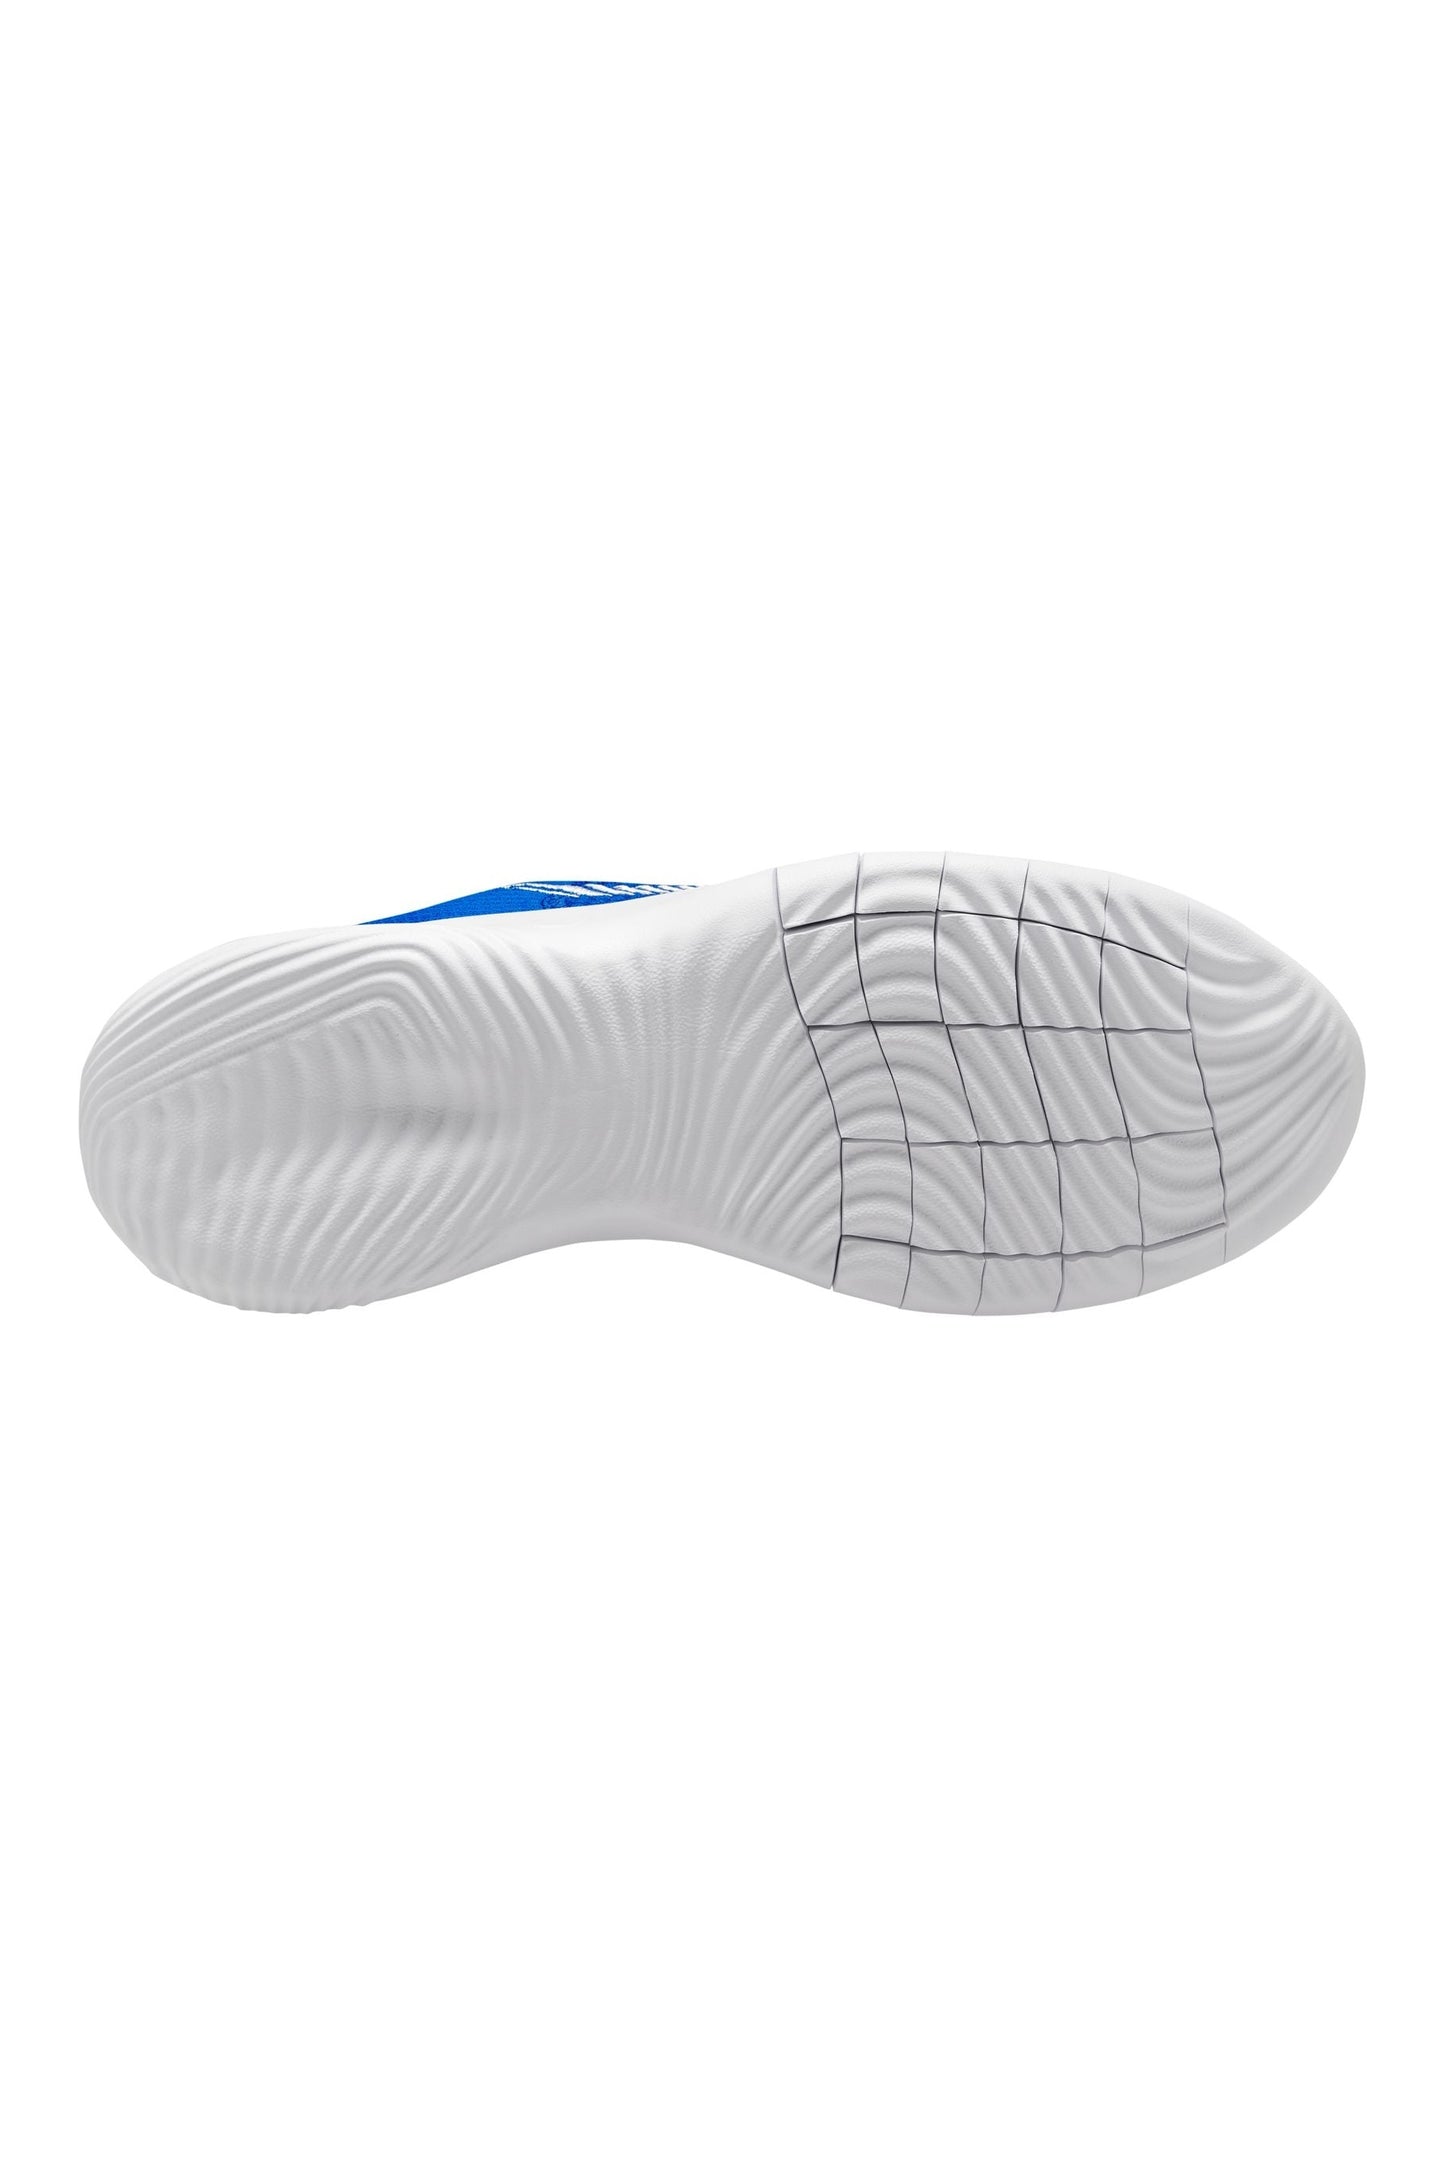 NIKE - נעלי ספורט לגברים Flex Experience Run 11 בצבע כחול - MASHBIR//365